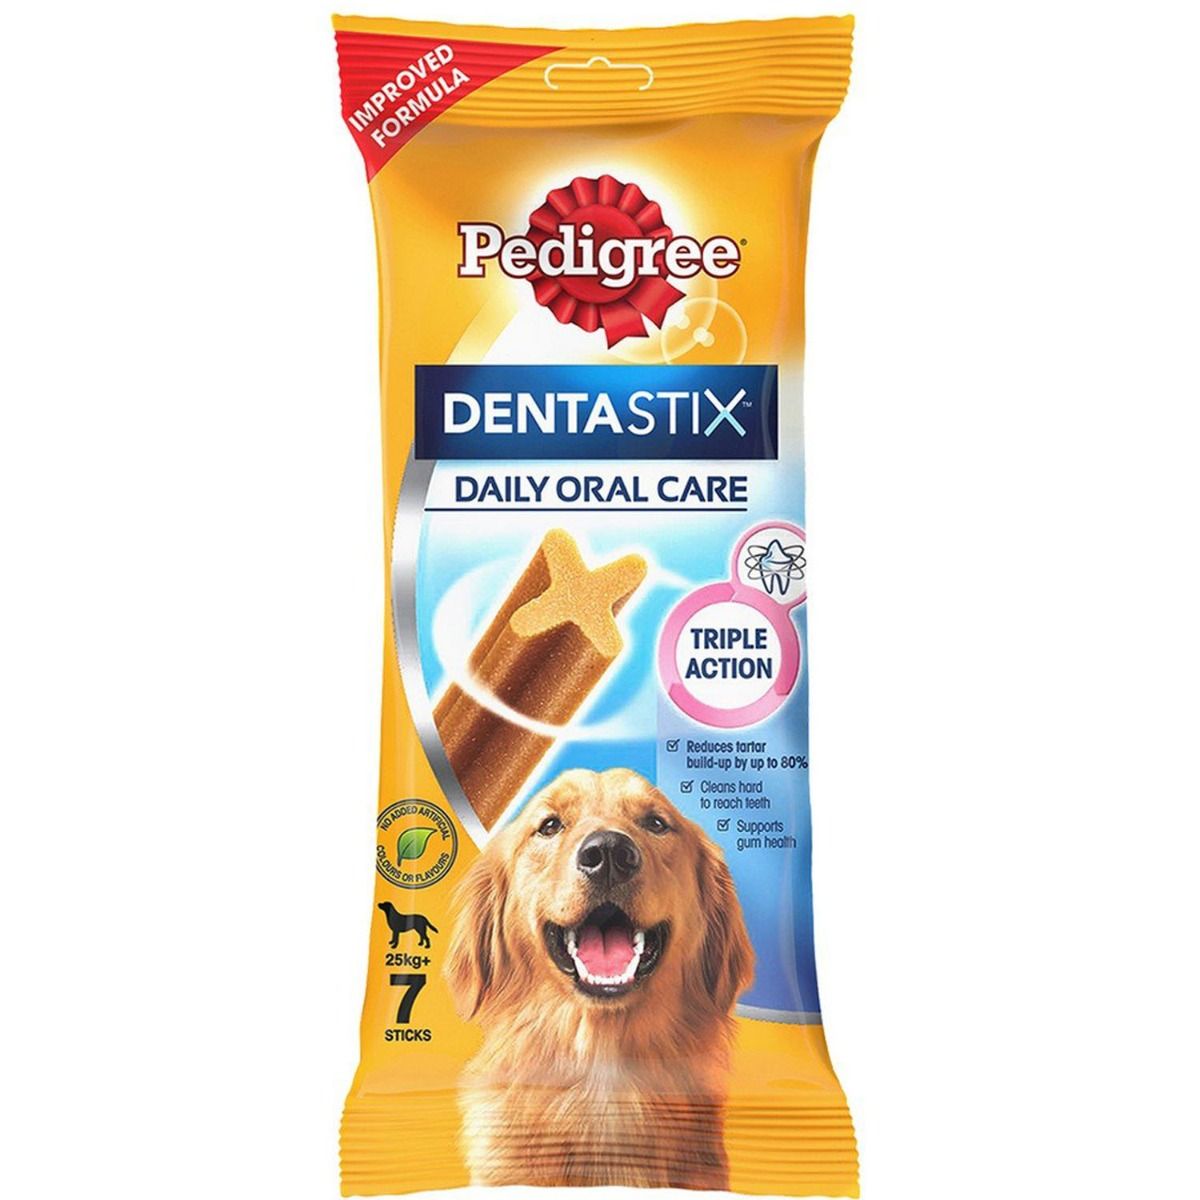 Buy Pedigree Denta Stix Daily Oral Care, 270 gm Online